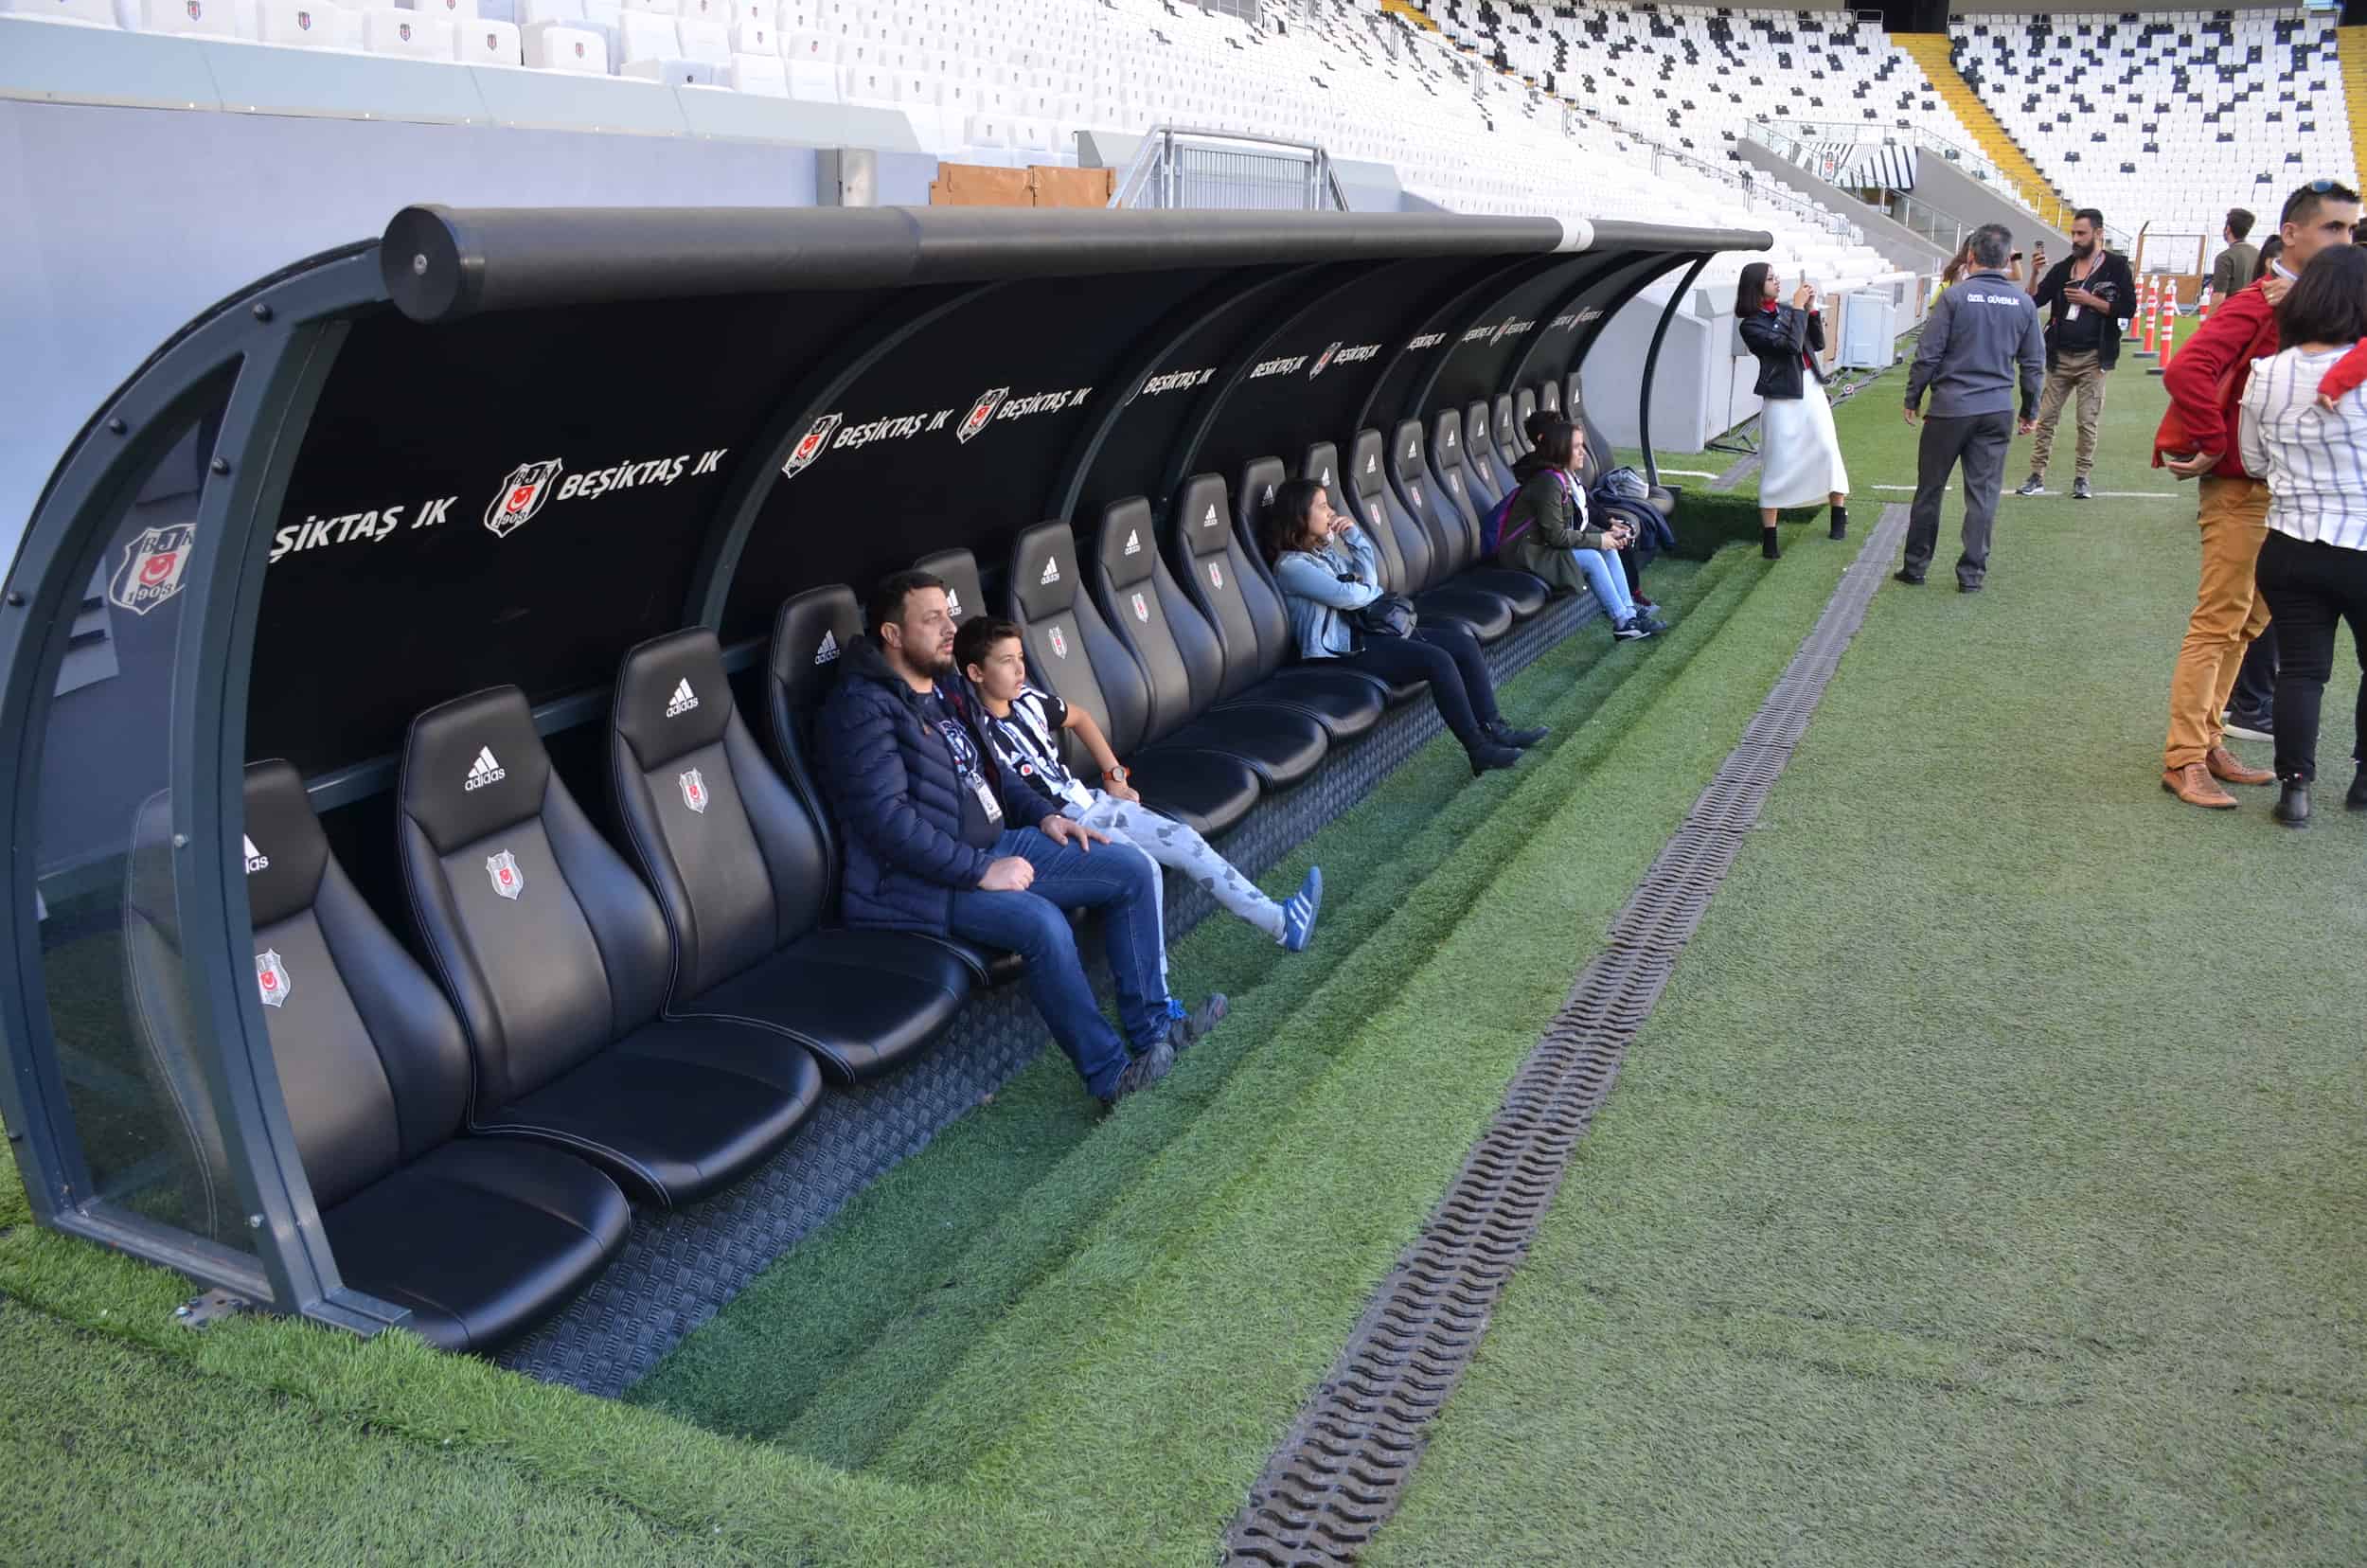 Bench at Beşiktaş Stadium in Istanbul, Turkey